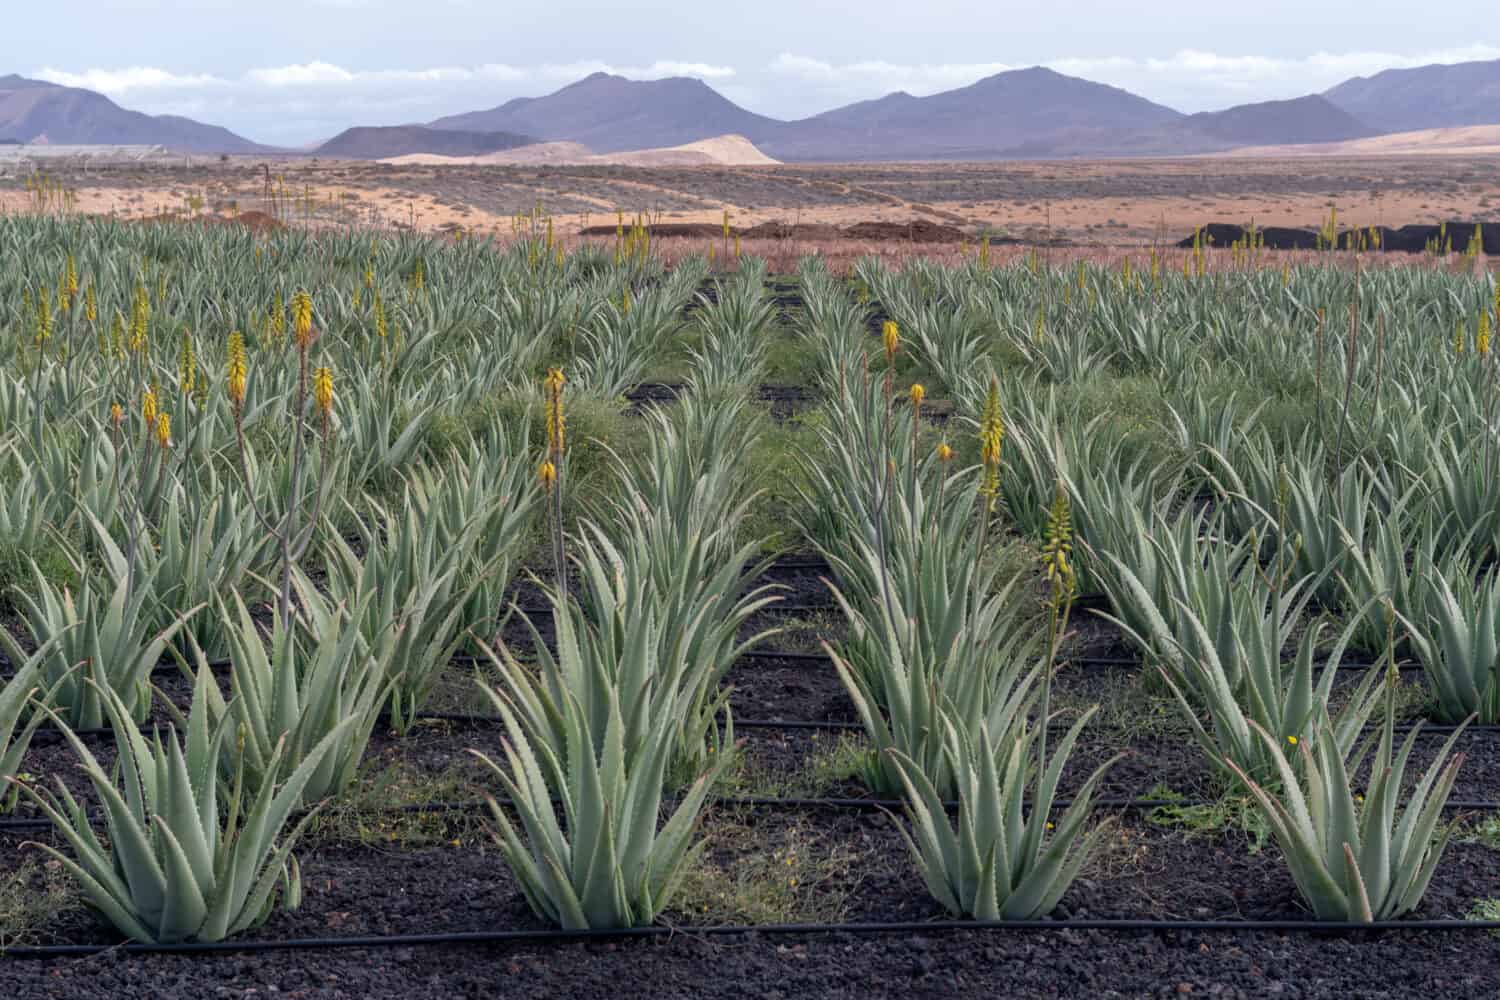 Aloe vera plants on the farm, Fuerteventura, Canary Islands, Spain 